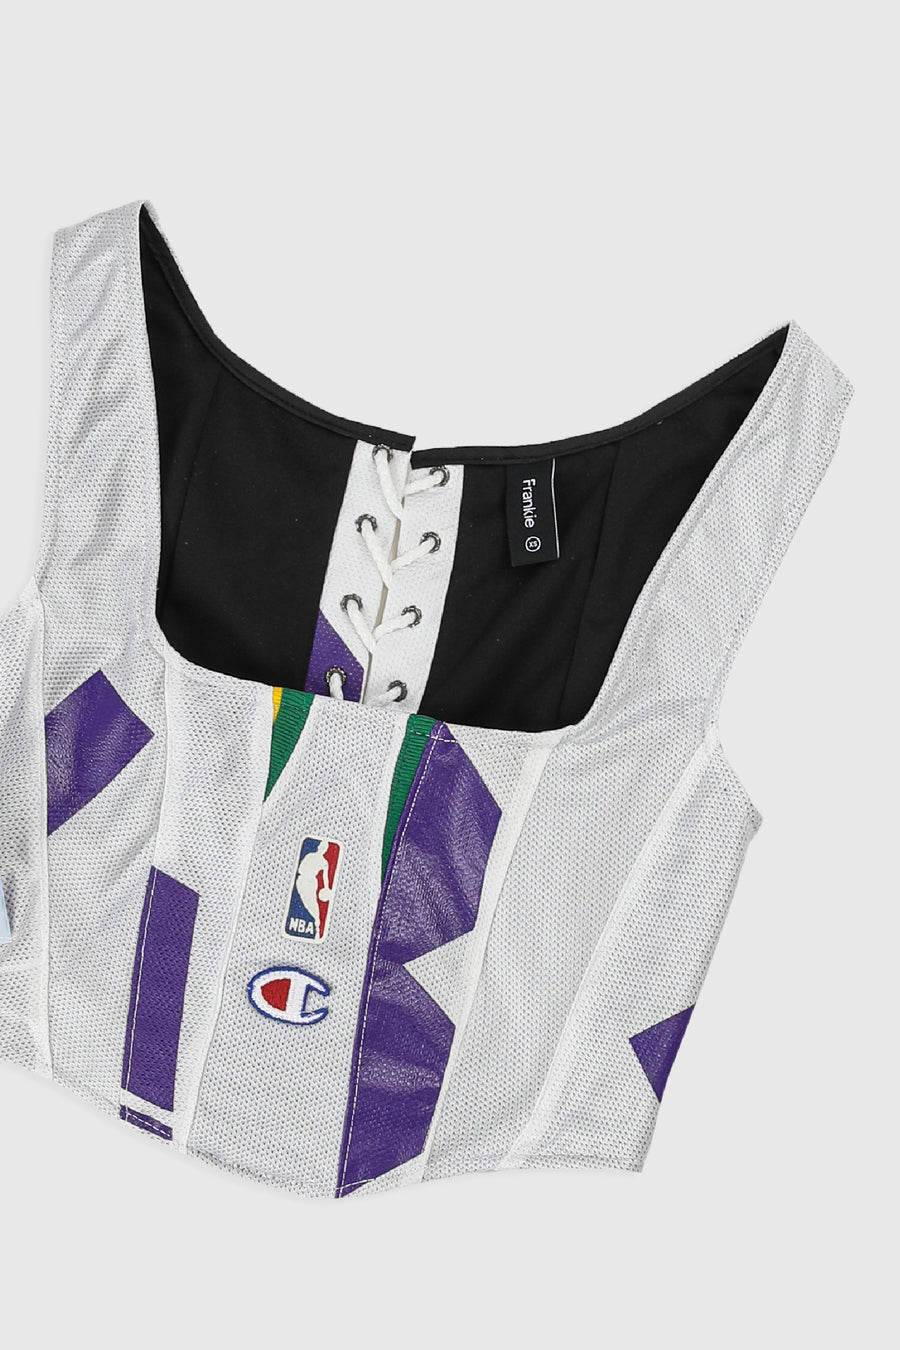 Rework Utah Jazz NBA Corset - XS